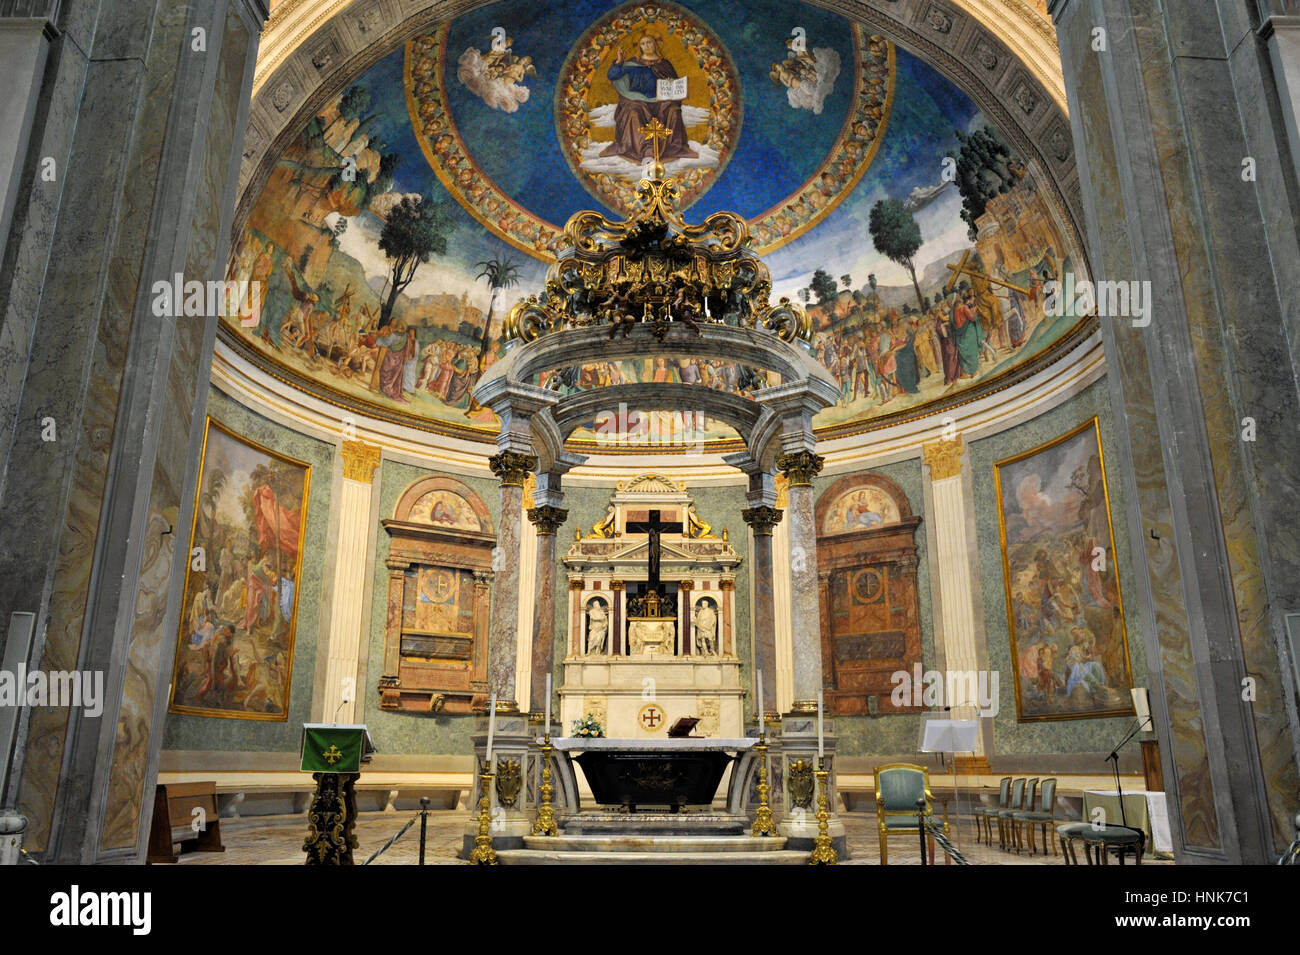 Italia, Roma, basilica di Santa Croce in Gerusalemme Foto stock - Alamy